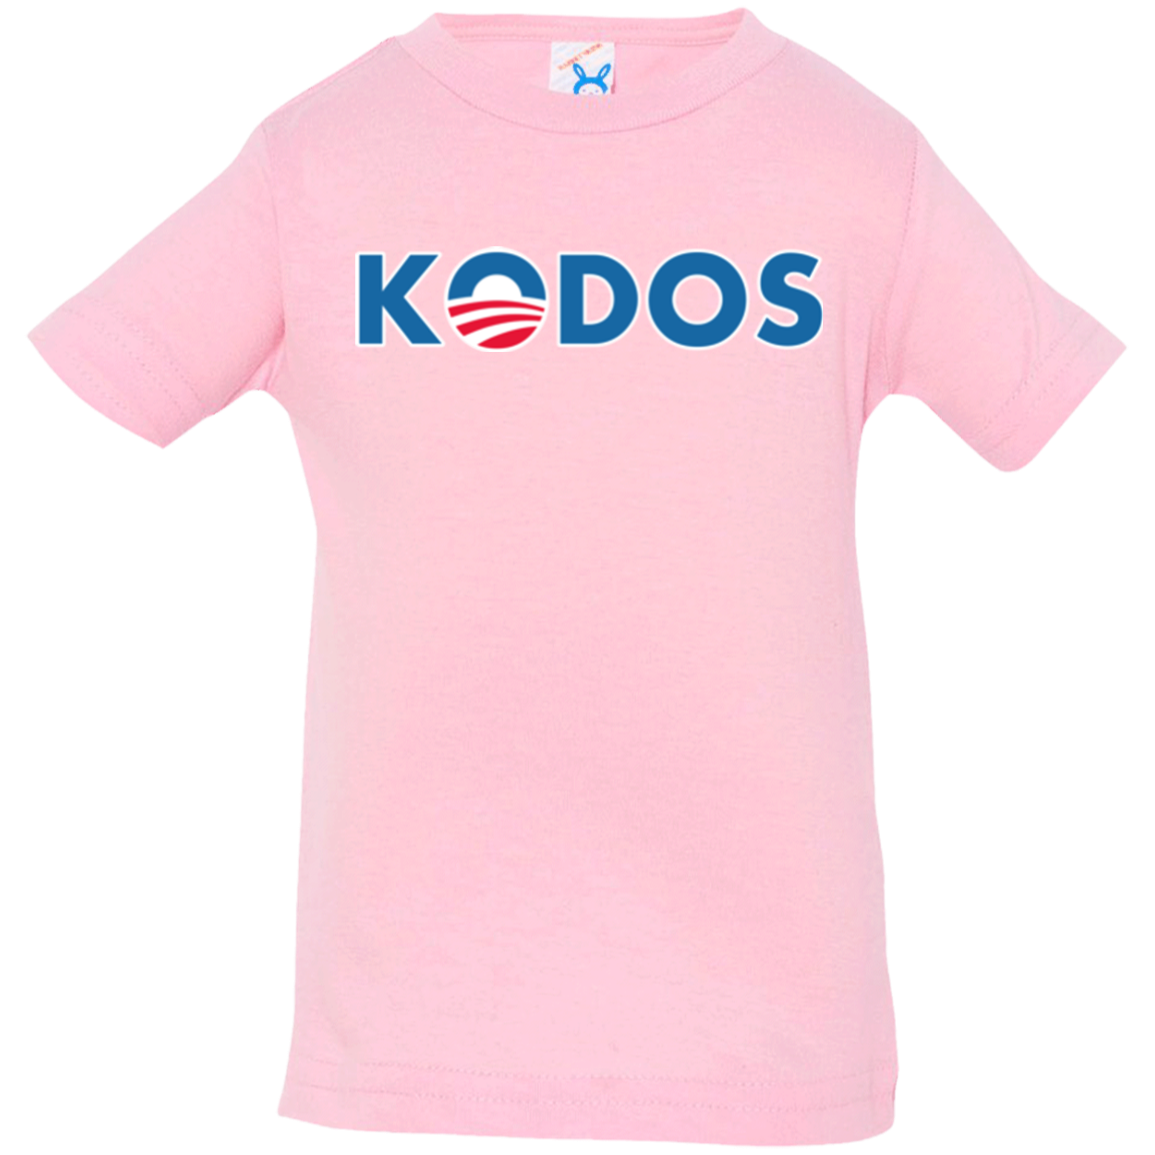 Vote for Kodos Infant Premium T-Shirt